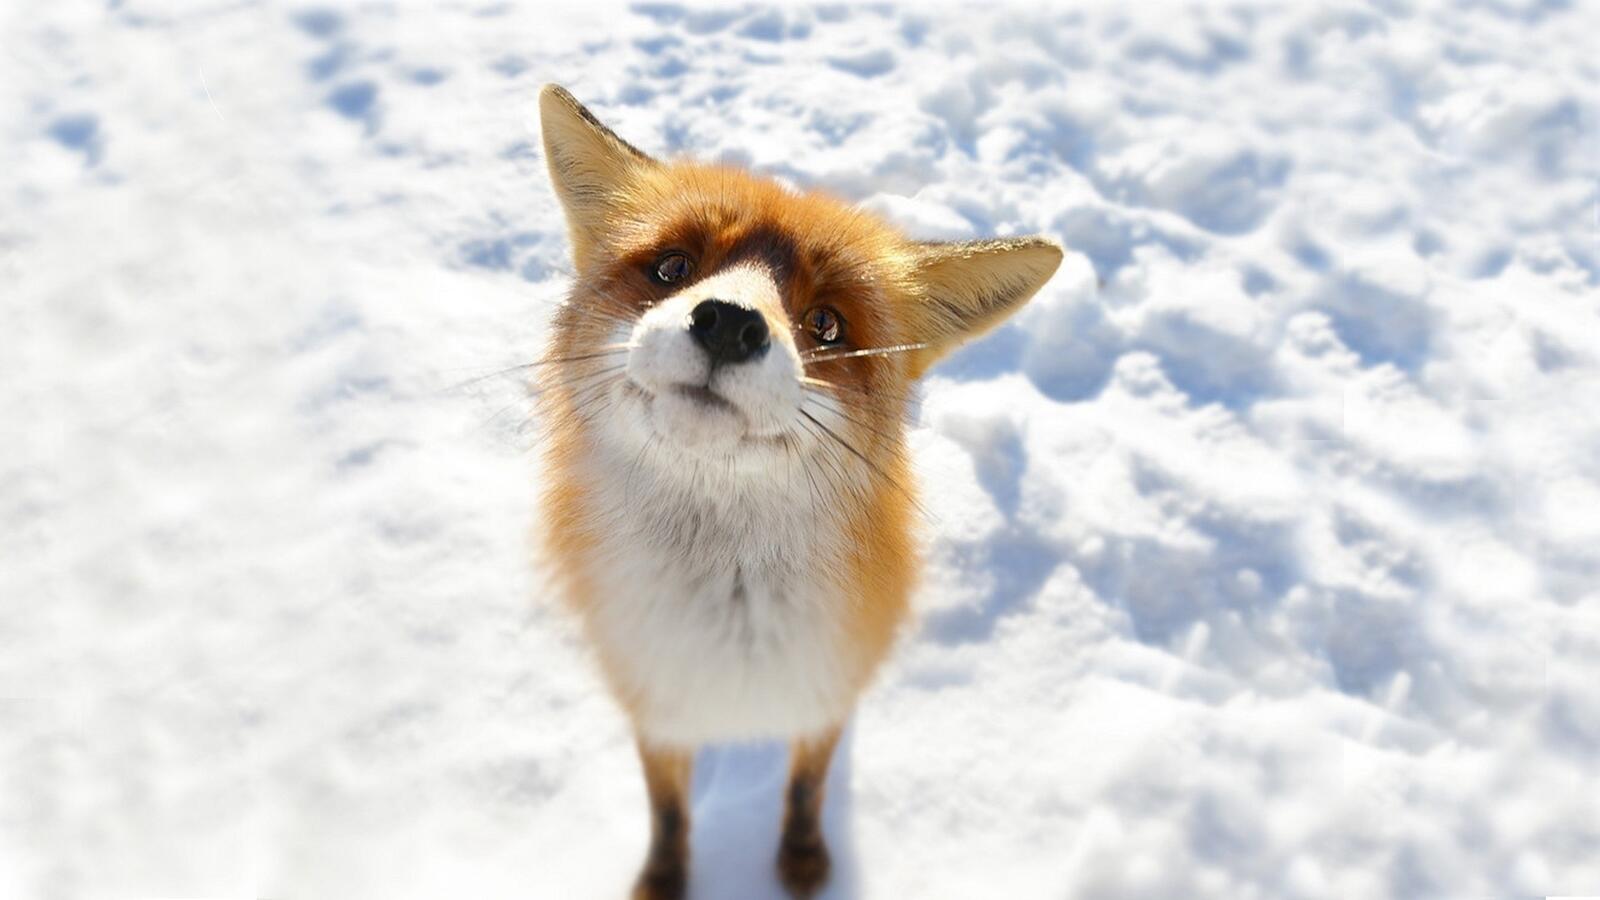 Wallpapers animals snow fox on the desktop